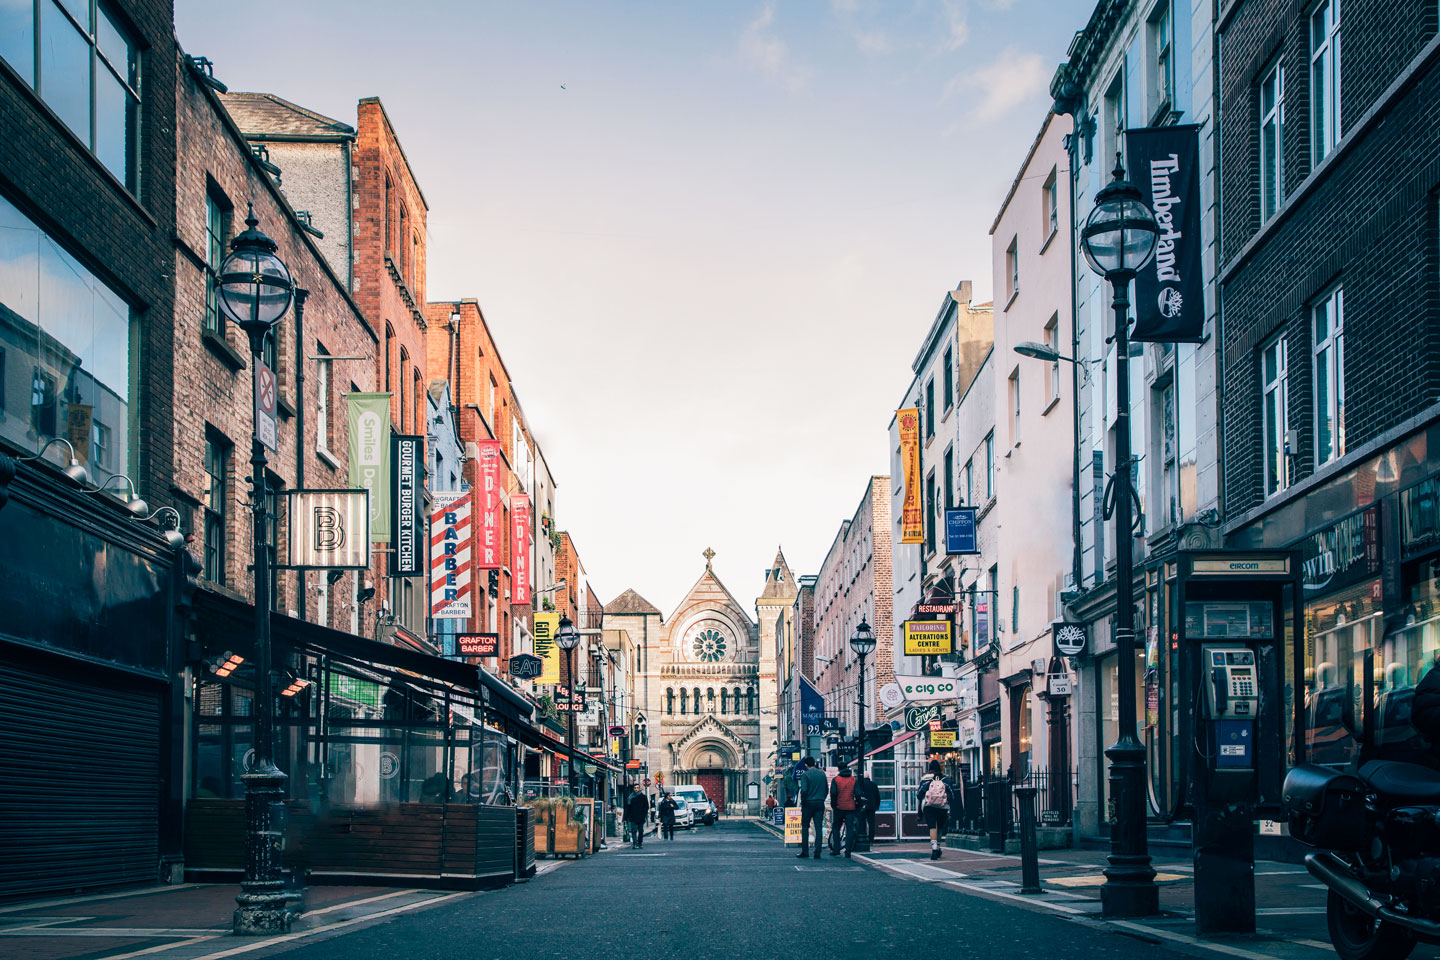 View of Anne Street with St. Ann's Church in Dublin, Ireland